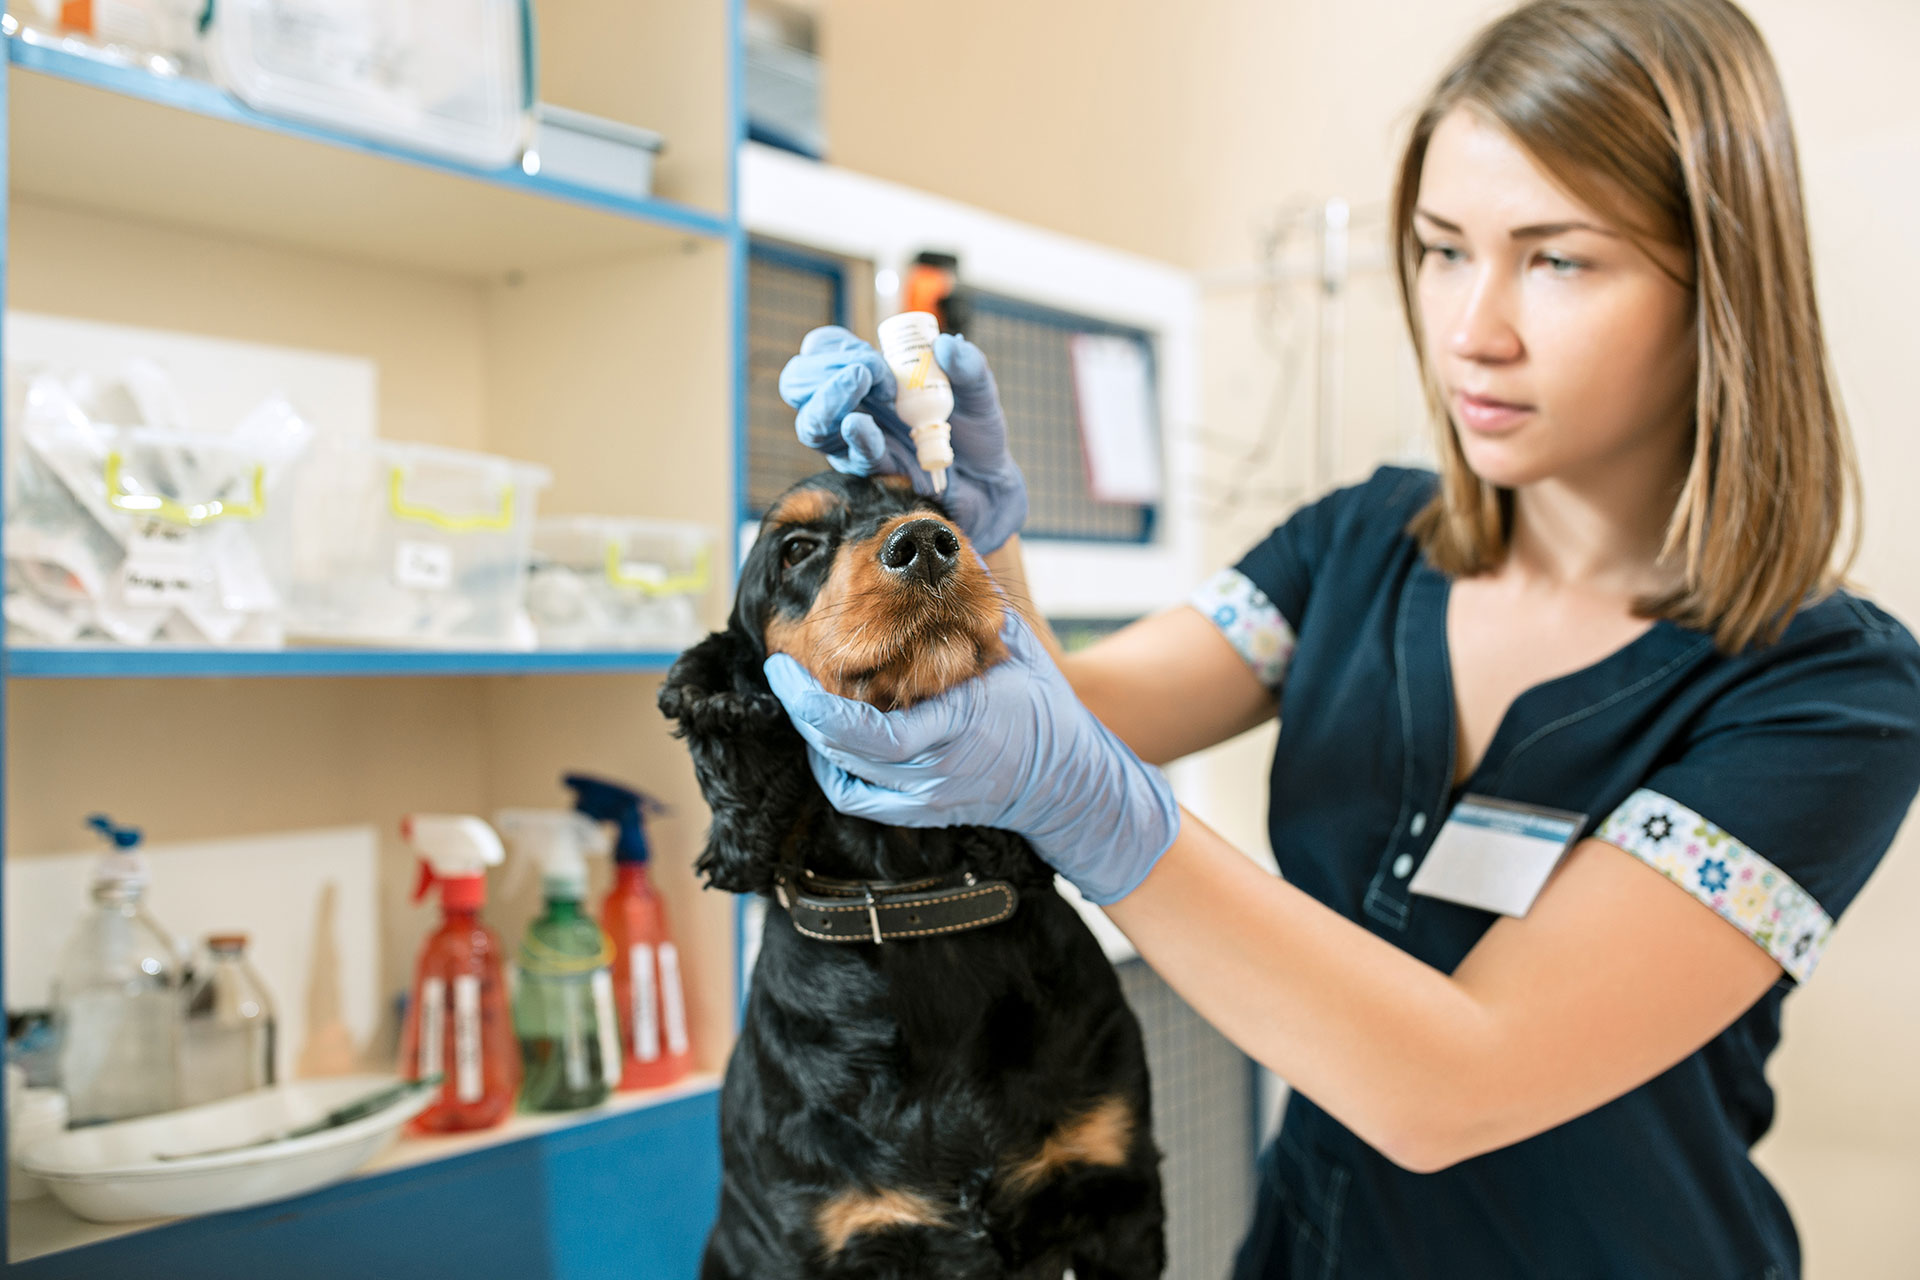 Shrubbery Veterinary Group - Veterinary Nurse giving medication to a dog